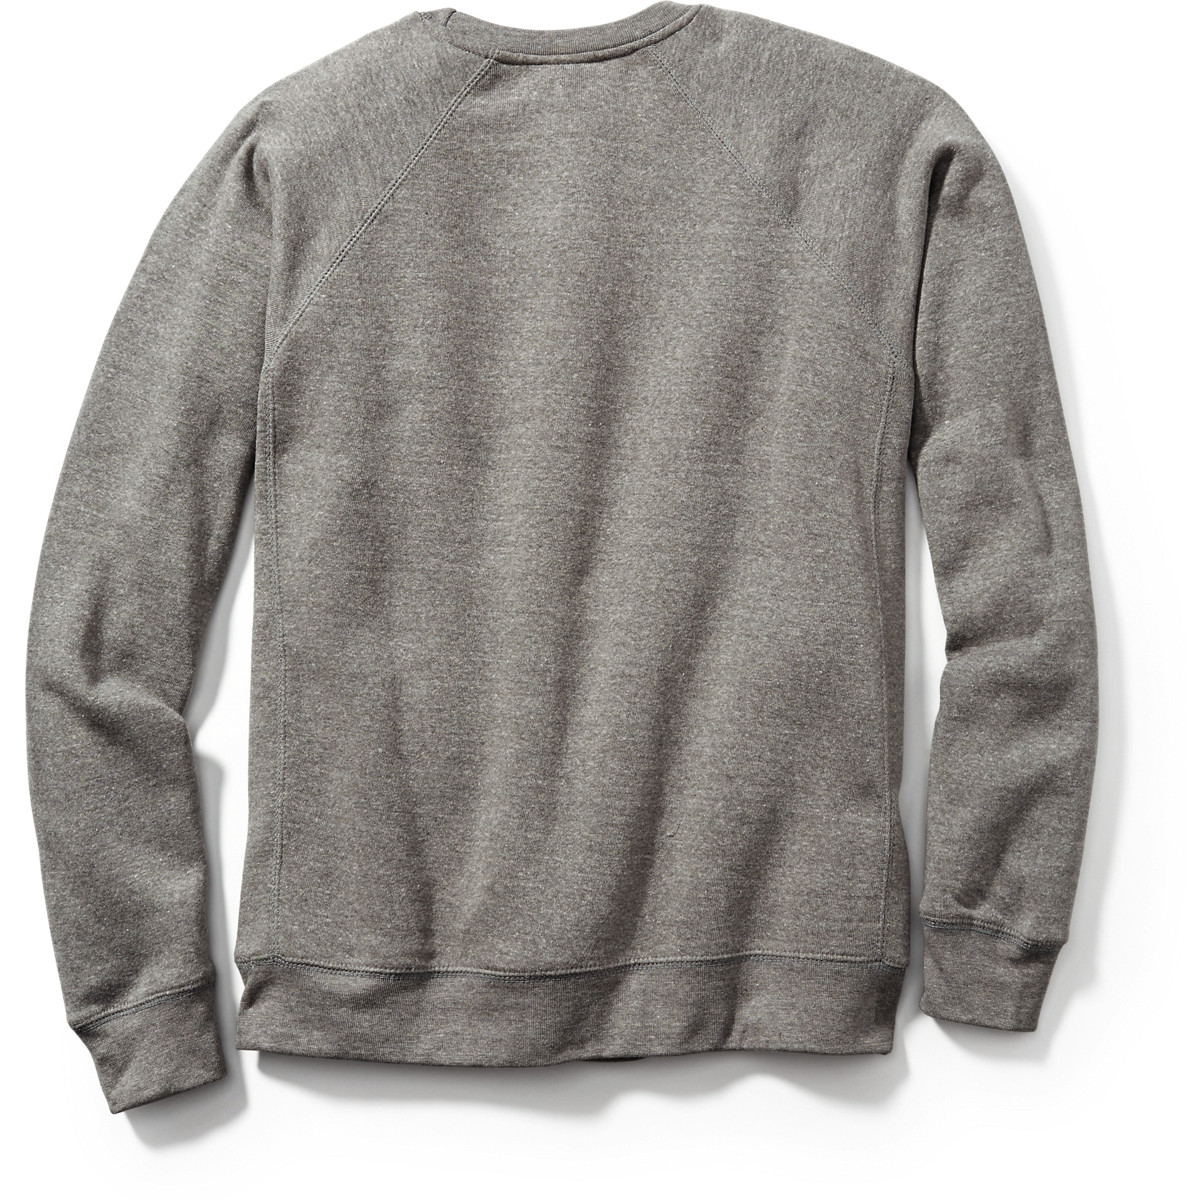 Danner Athletic Sweatshirt - Heather Gray thumbnail